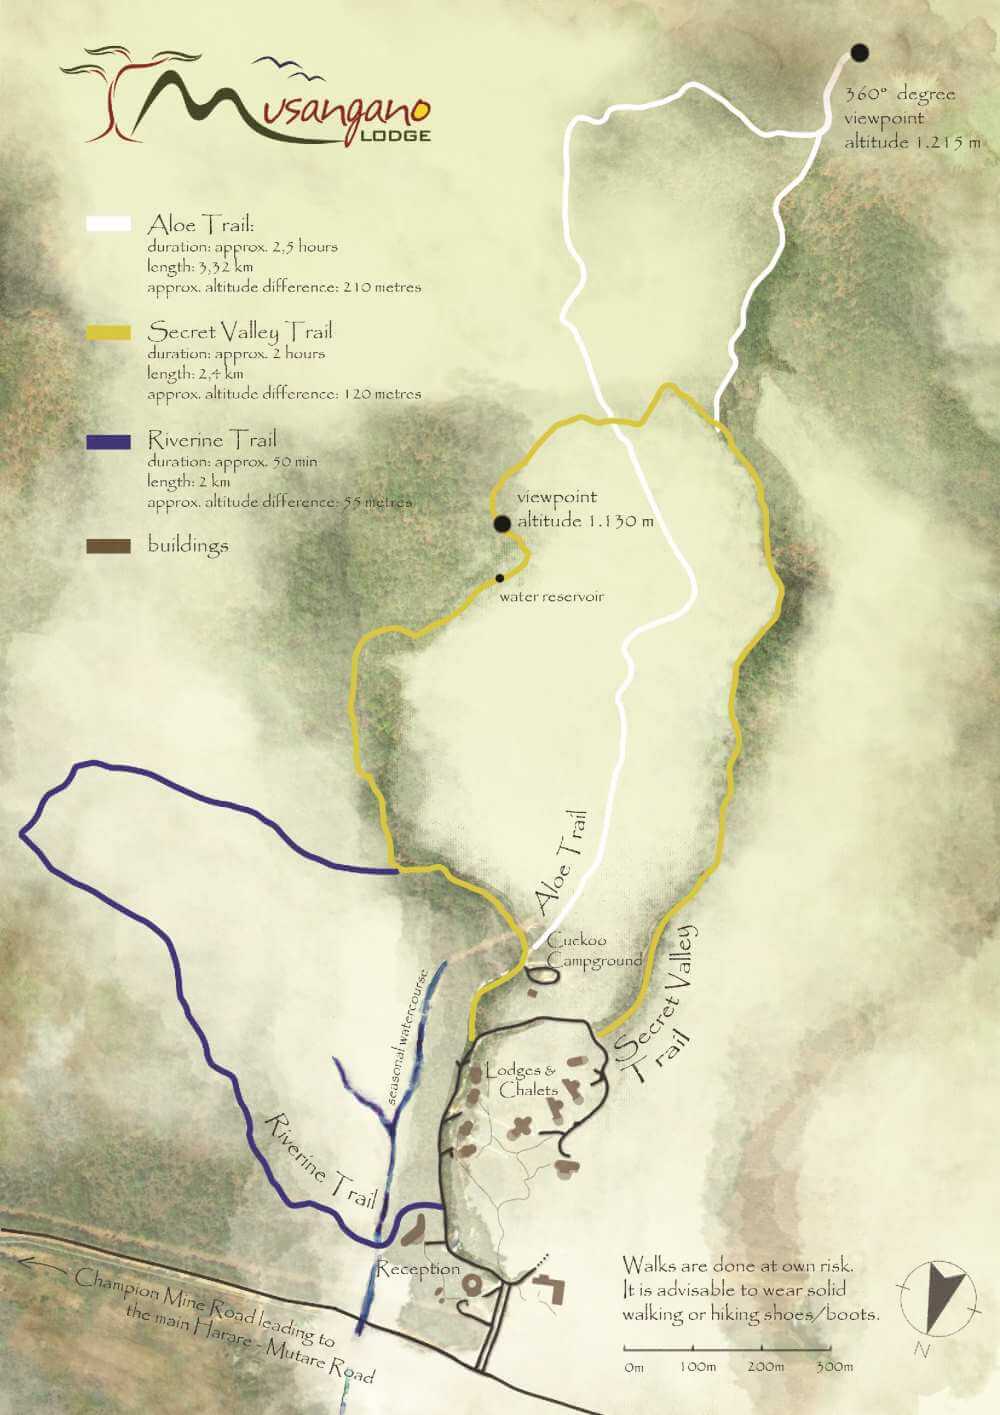 Map of Musangano Trails